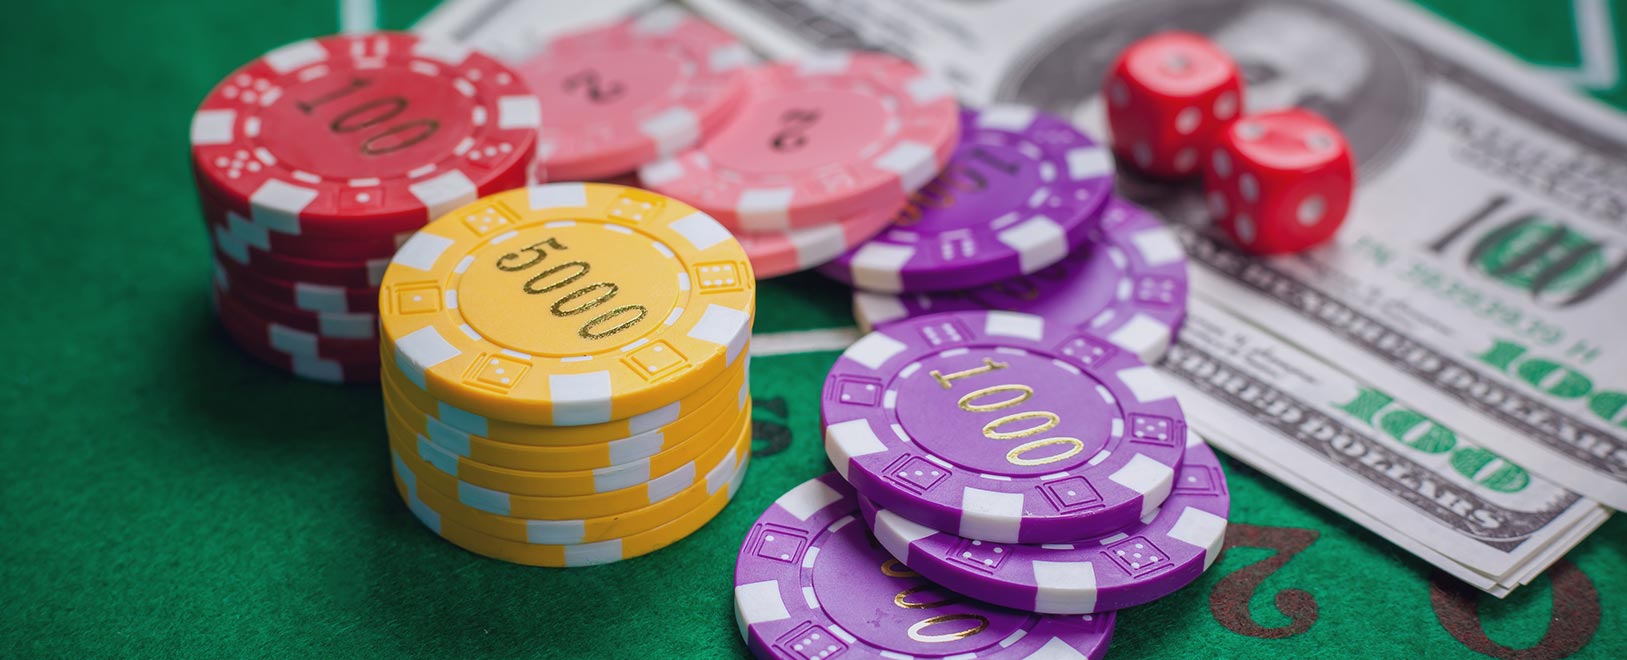 Bovada Casino Bonuses All You Need to Know